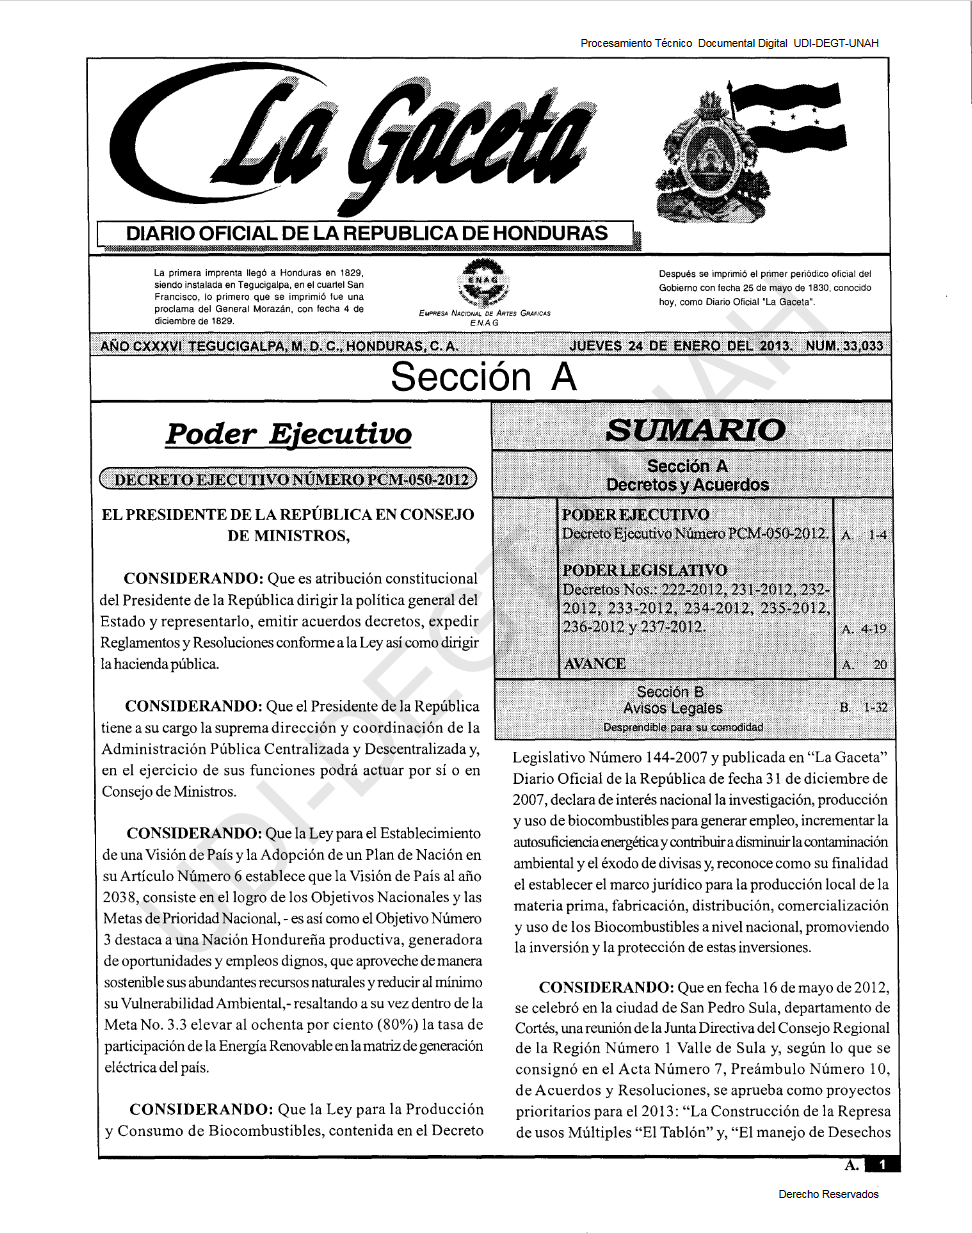 Reforma_adicion_art_205_constitucion_2013.png